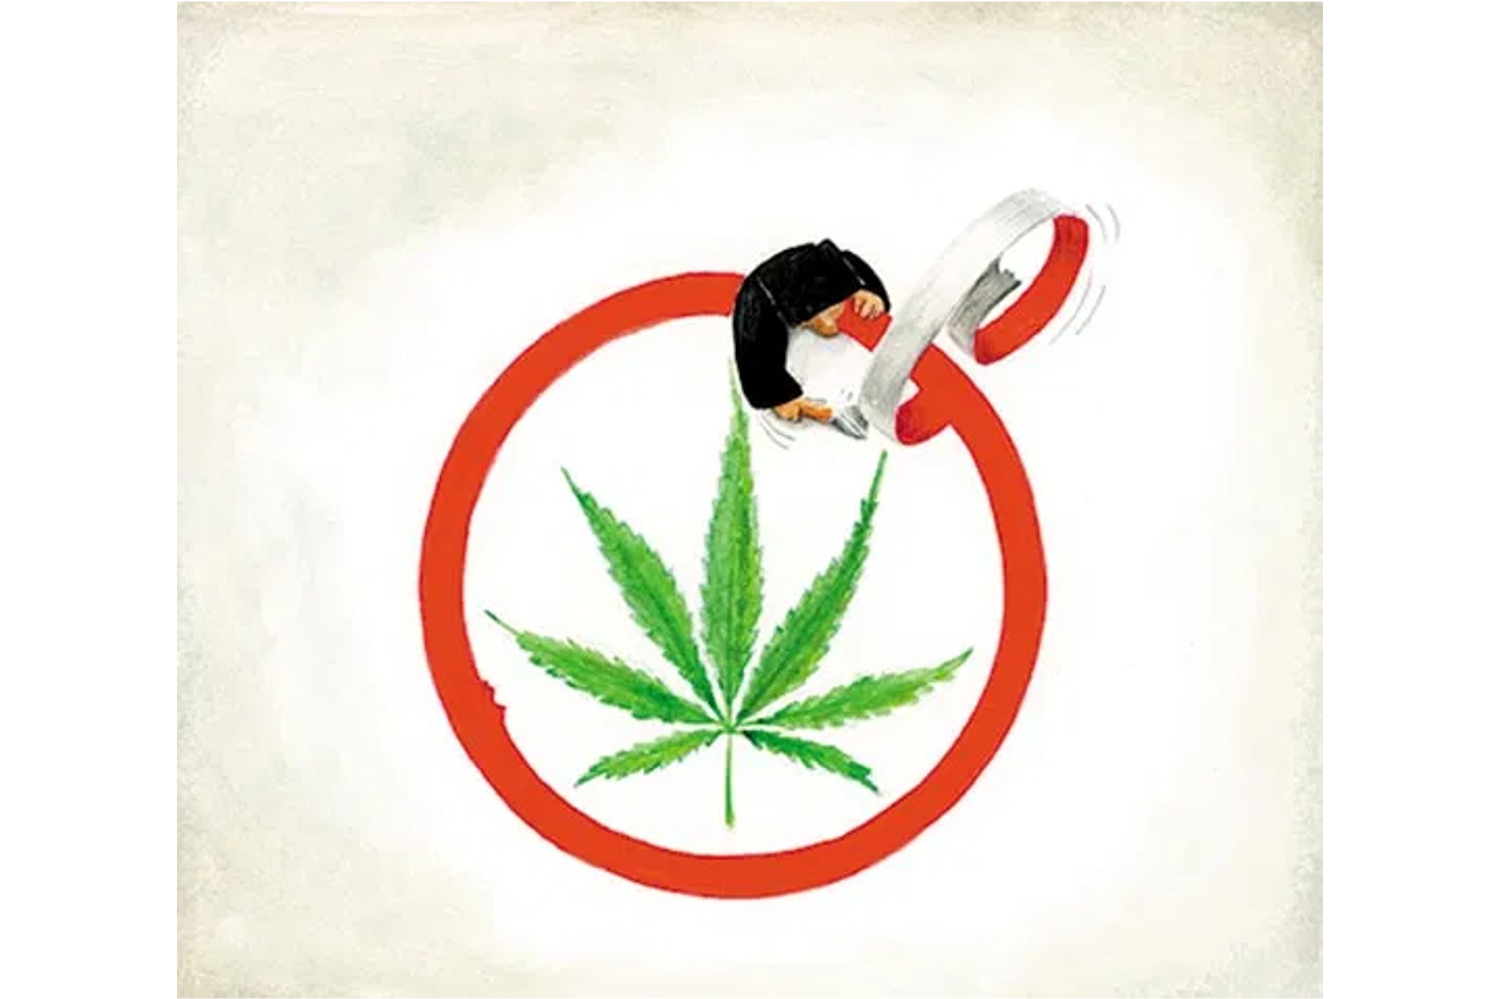 Cannabis leaf inside a red circle